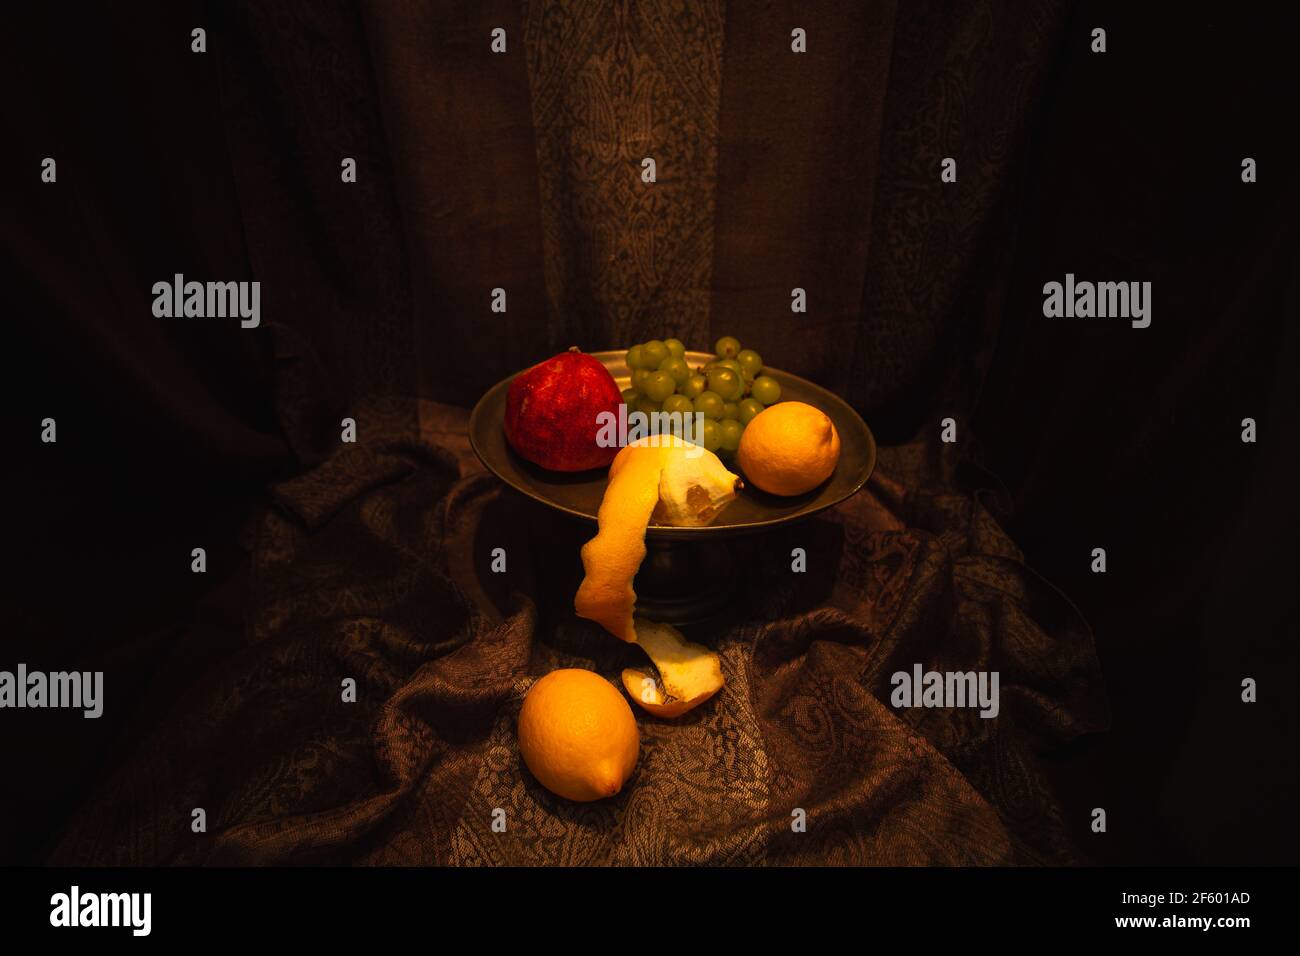 Apple,green and red apple, close up view, still life, detail shot, fruits still life, Art life, Nahaufnahme, Detailaufnahme, Stillleben, Arrangement Stock Photo